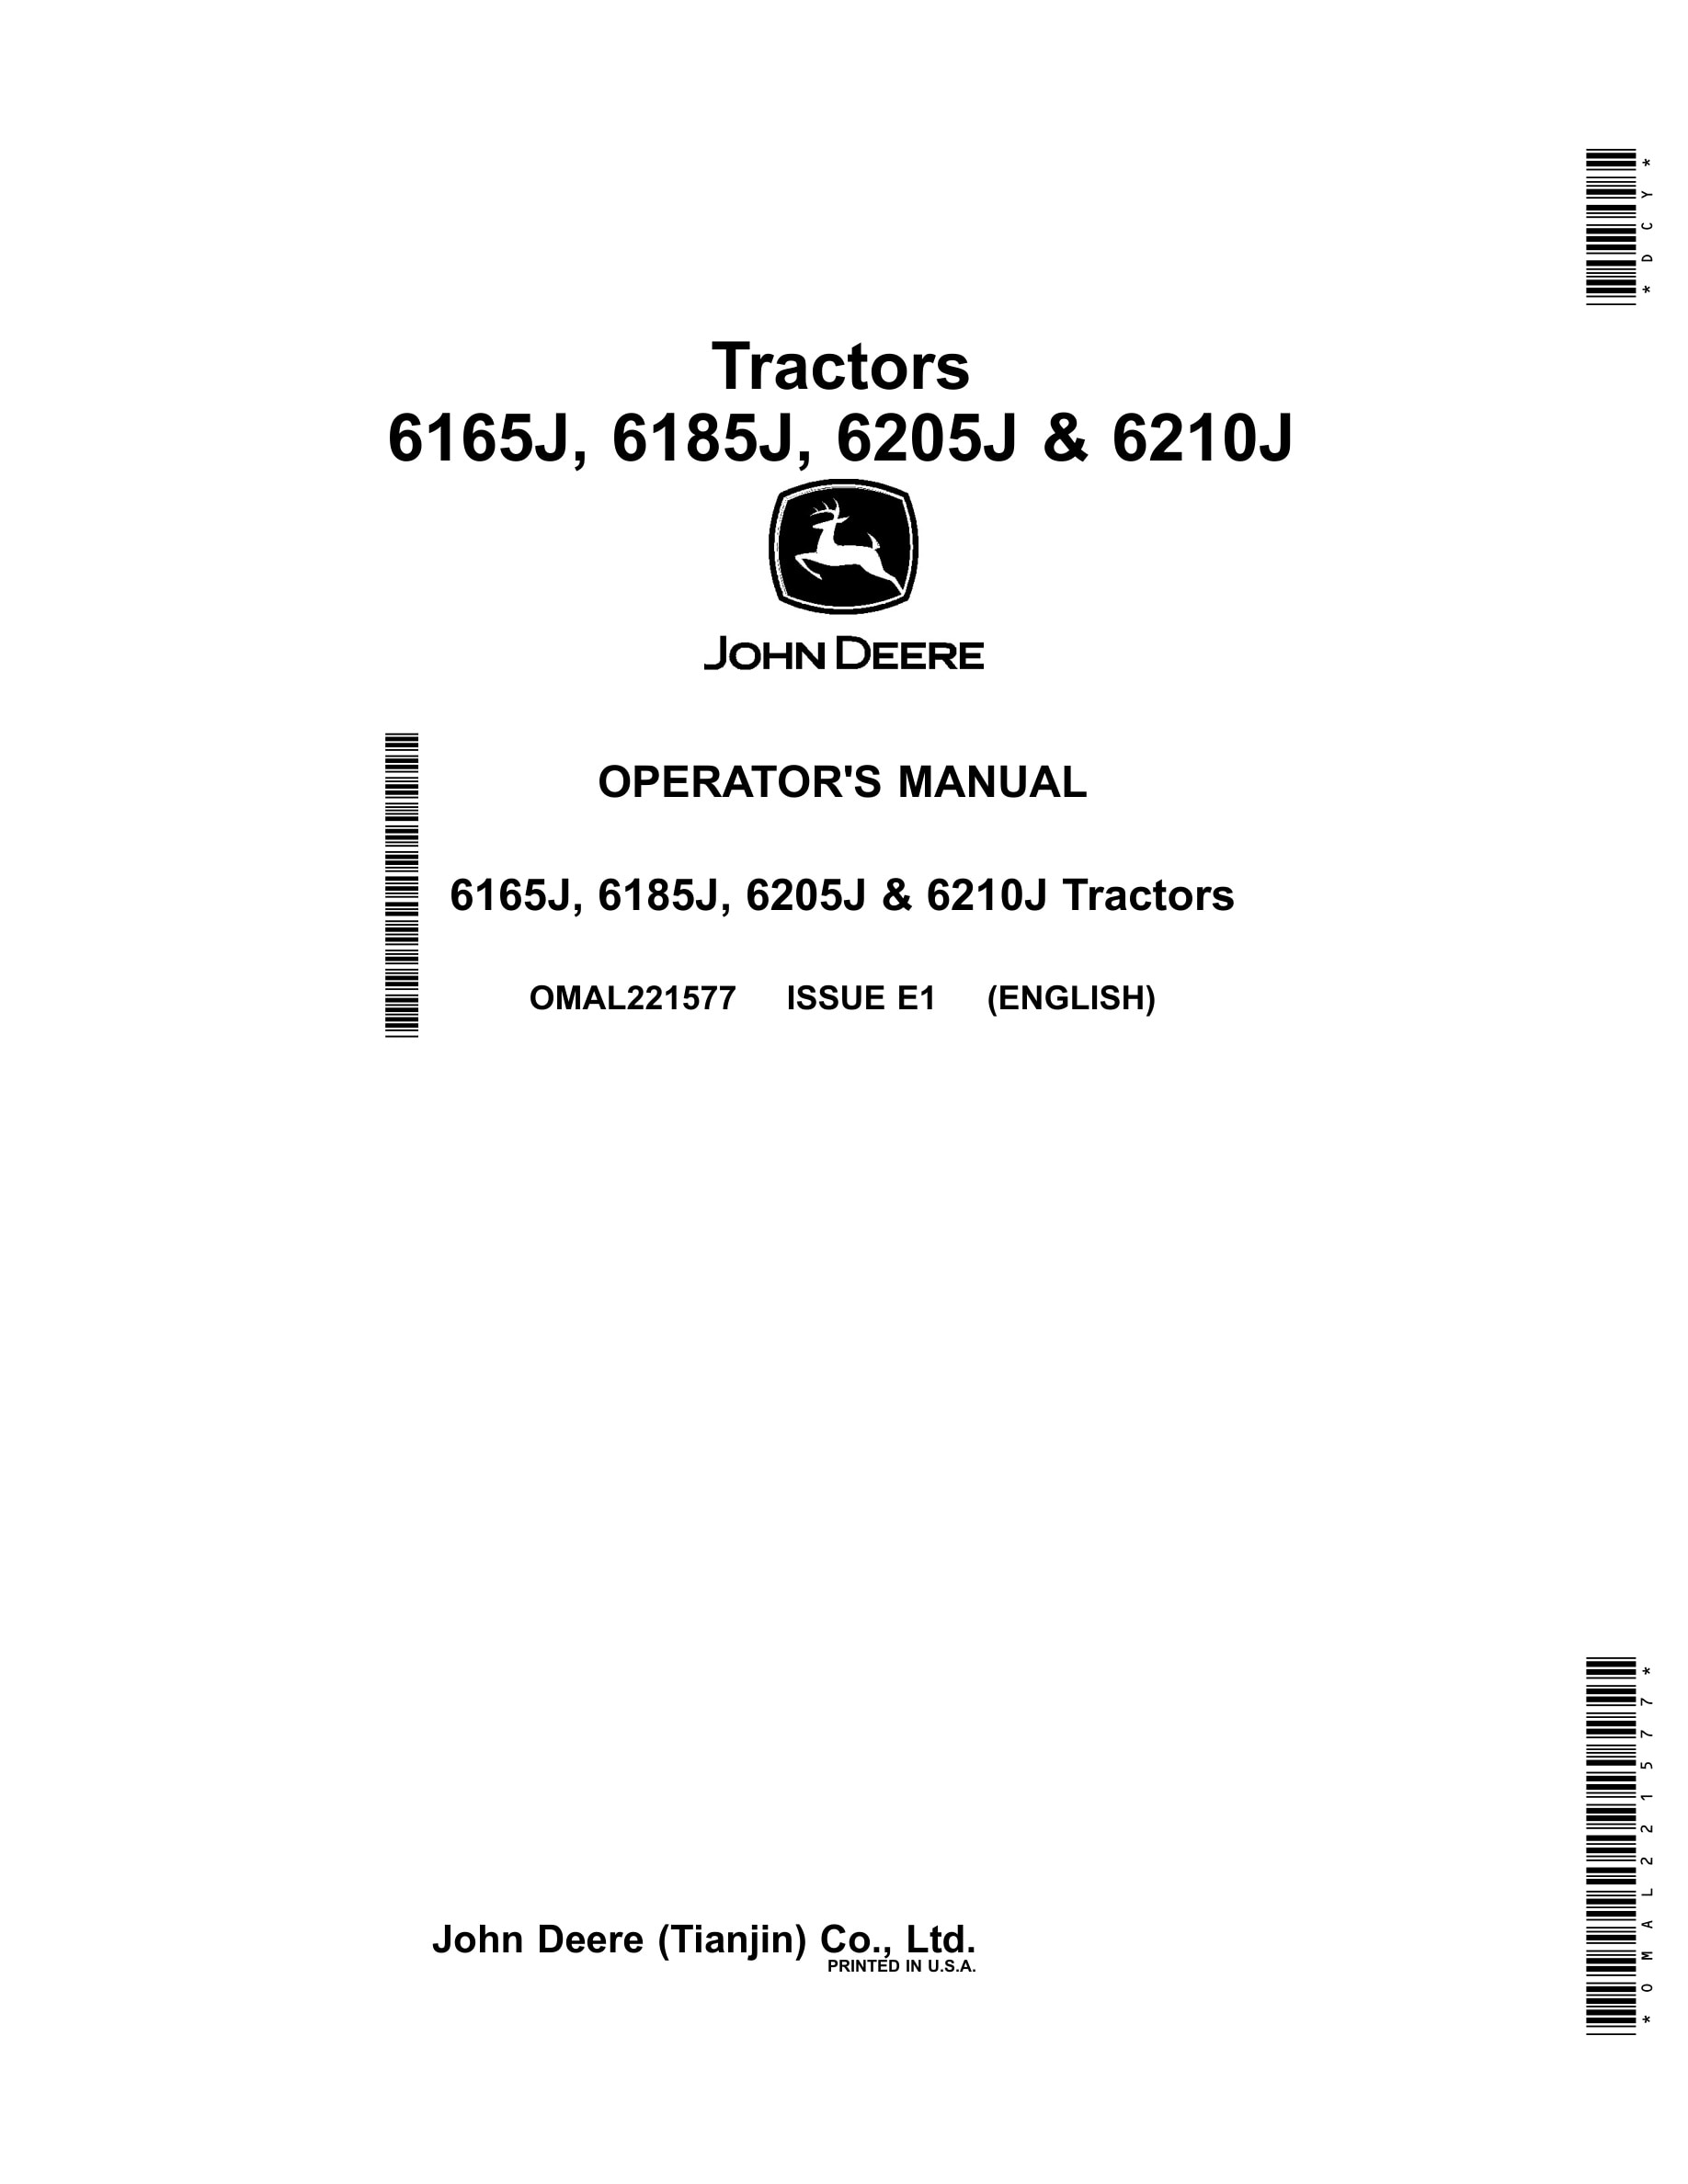 John Deere 6165j, 6185j, 6205j & 6210j Tractors Operator Manuals OMAL221577-1